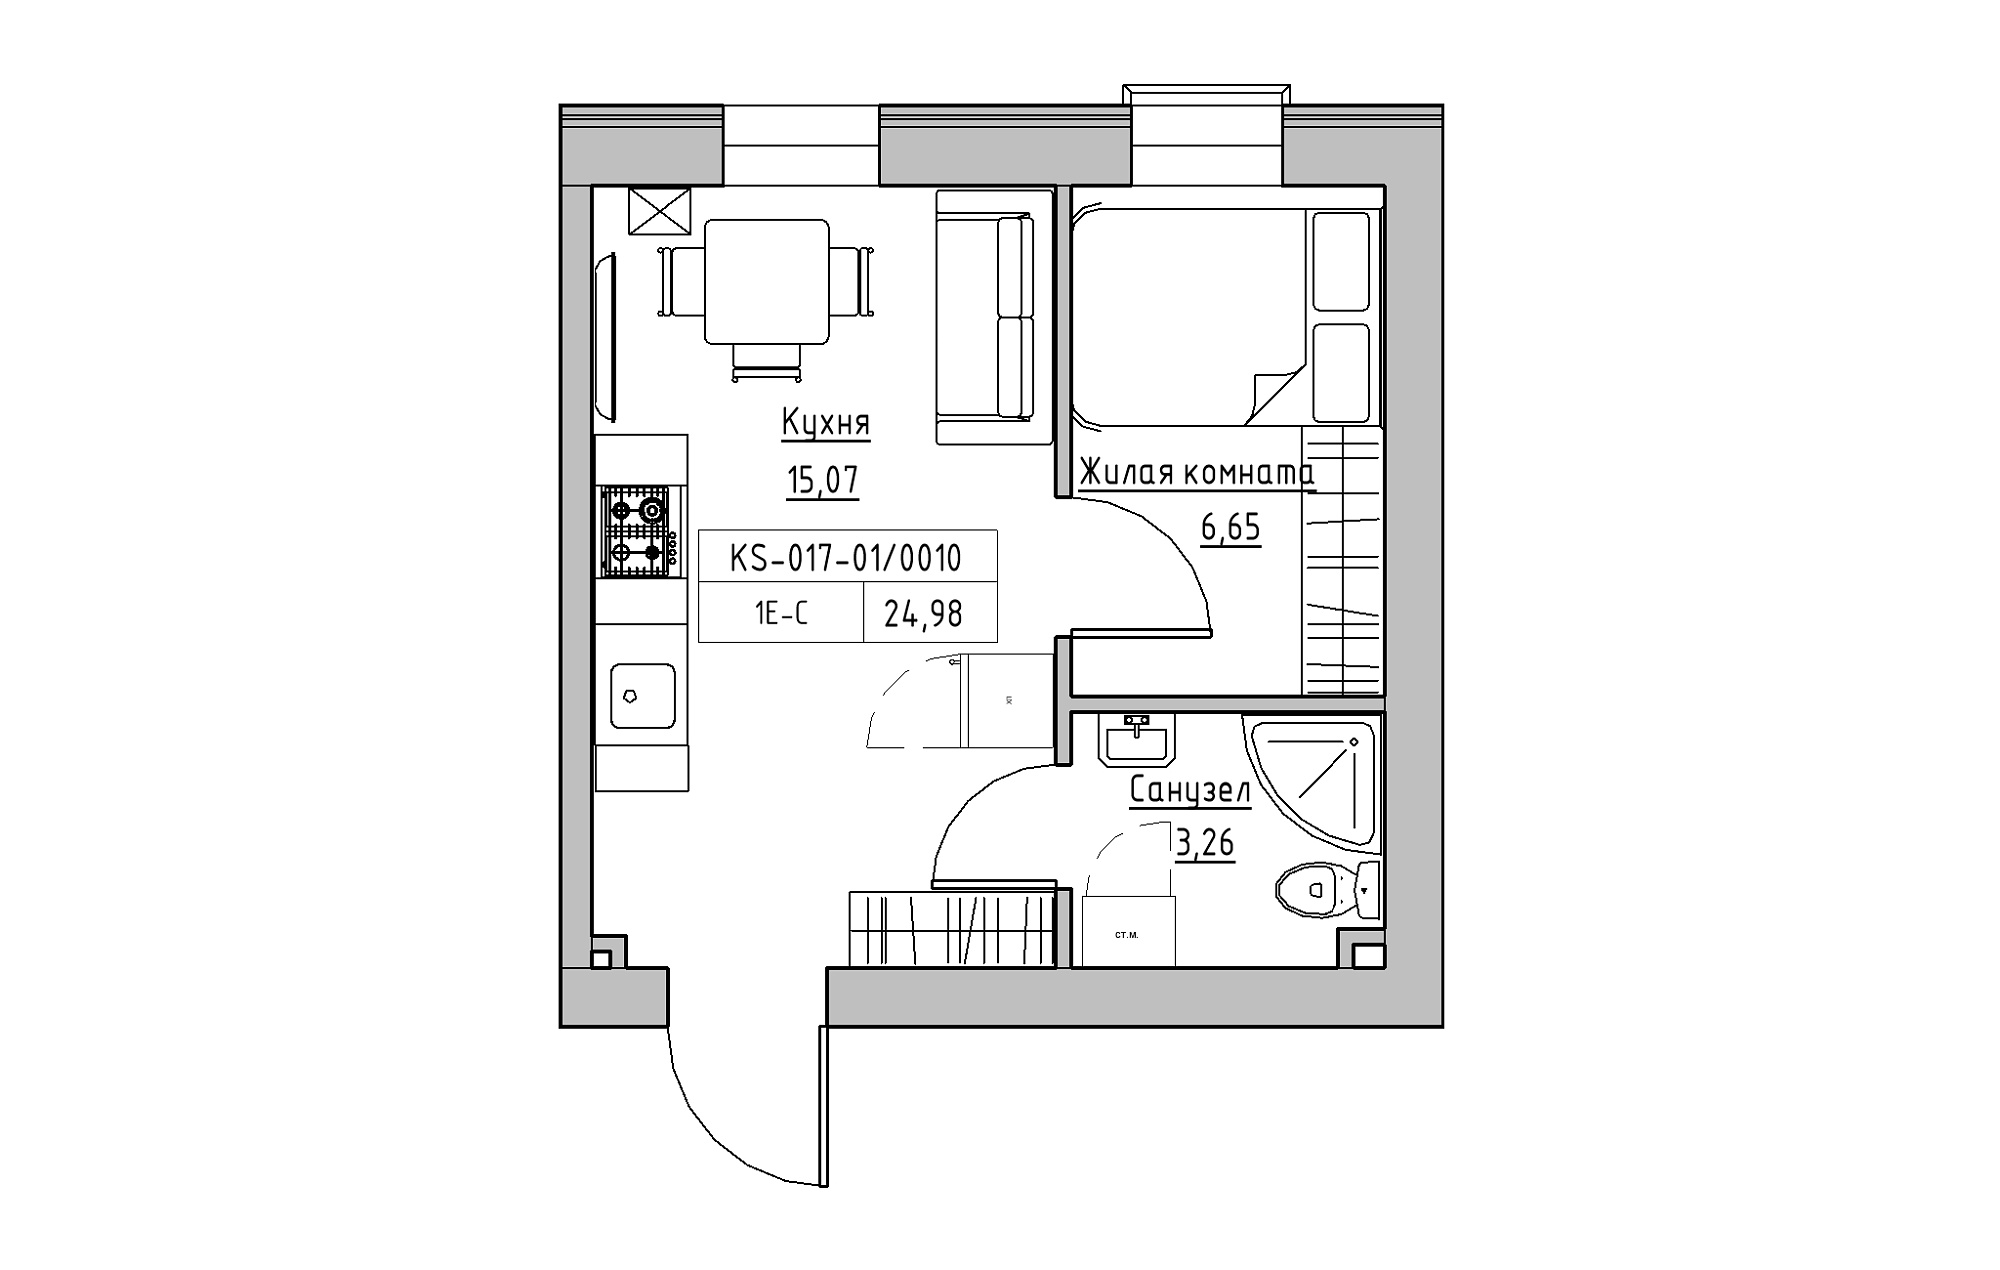 Planning 1-rm flats area 24.98m2, KS-017-01/0010.